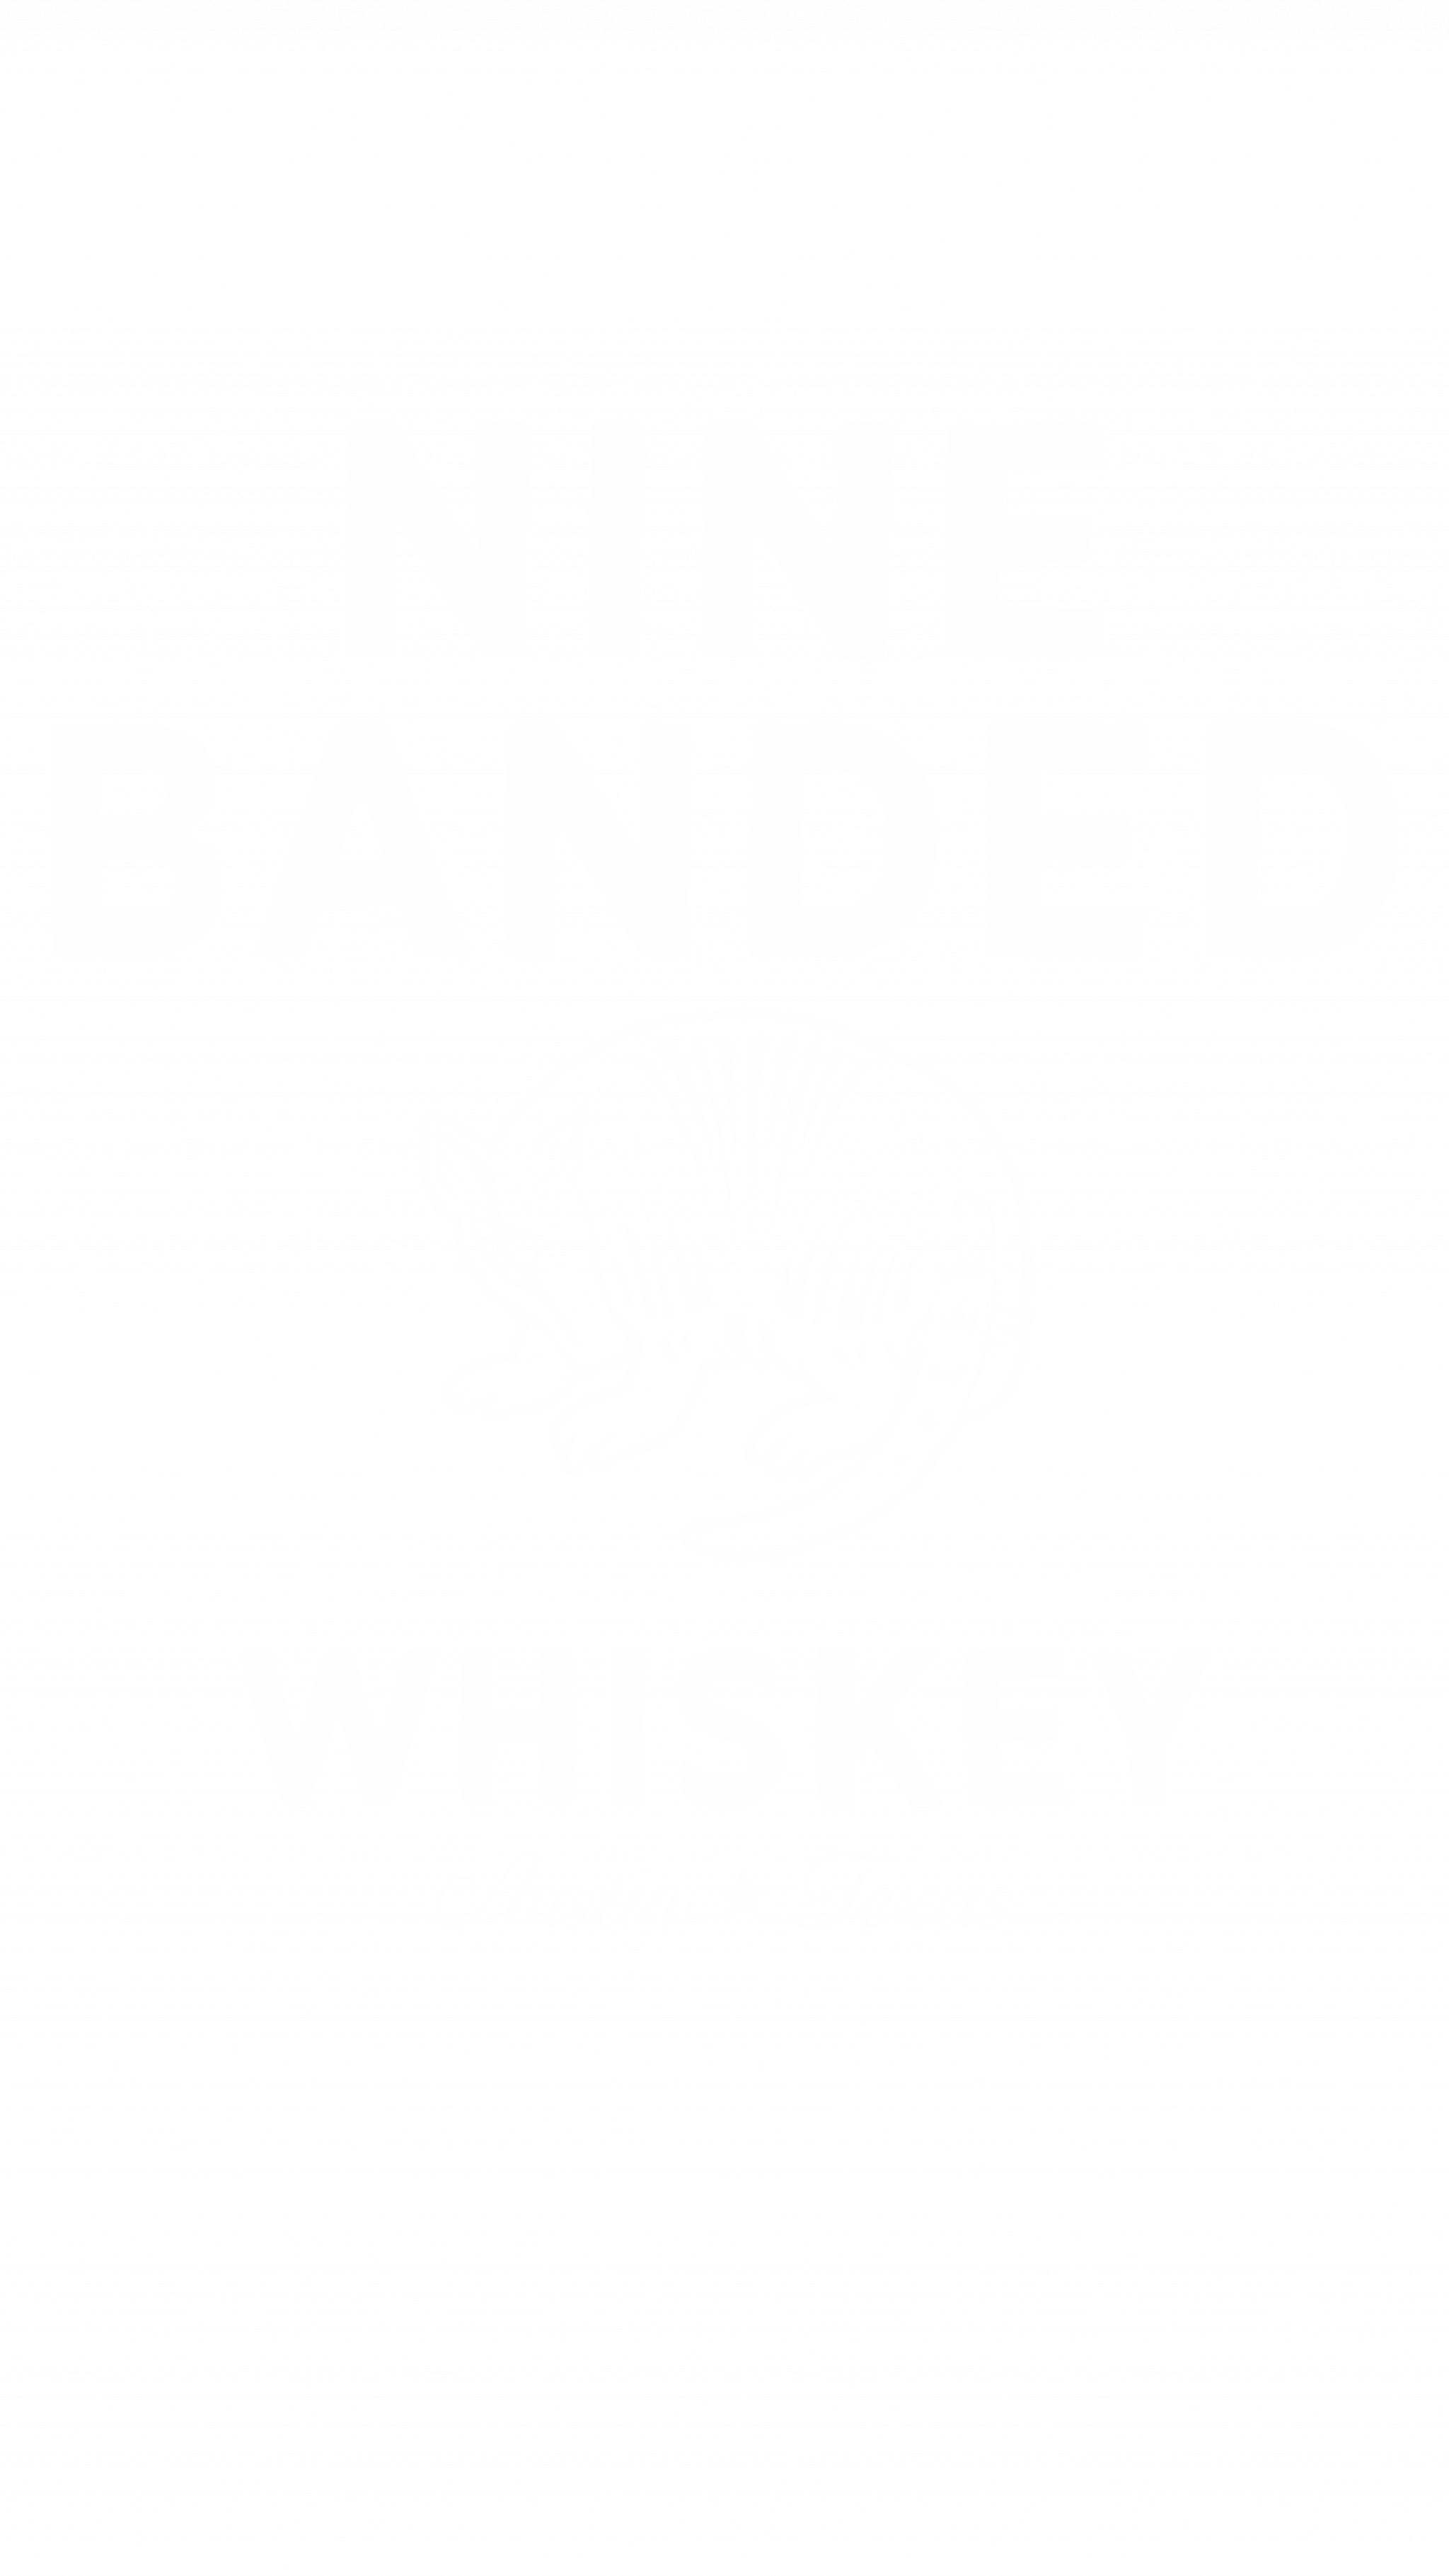 www.ninebandedwhiskey.com